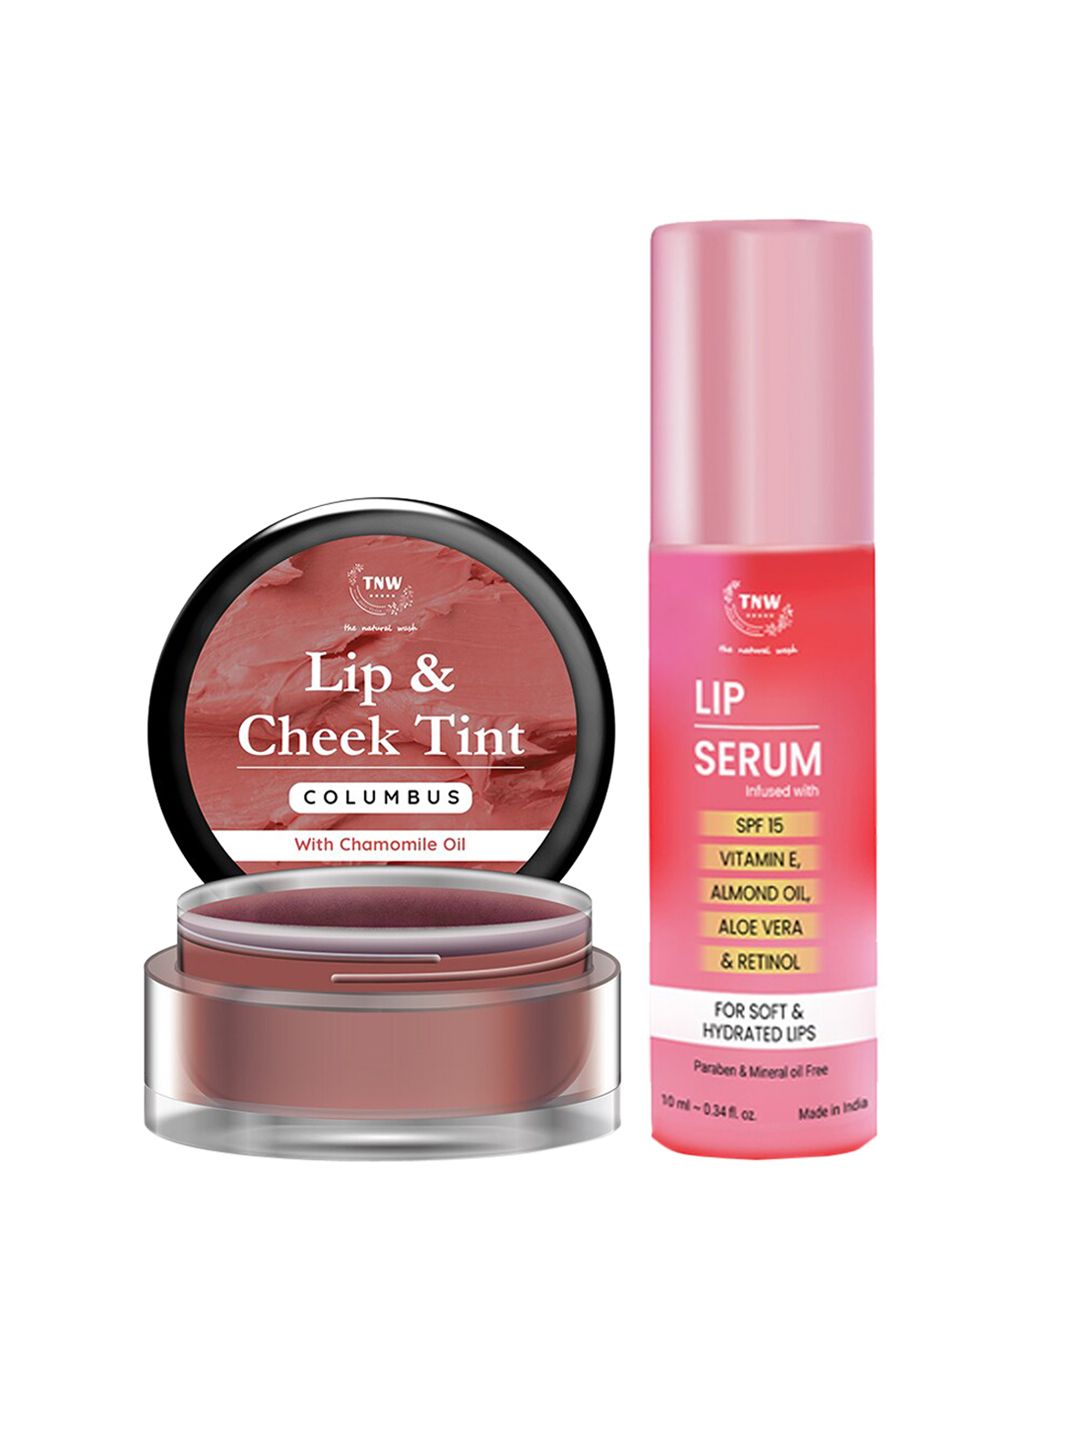 TNW the natural wash Set of Lip & Cheek Tint-Columbus & Lip Serum Price in India